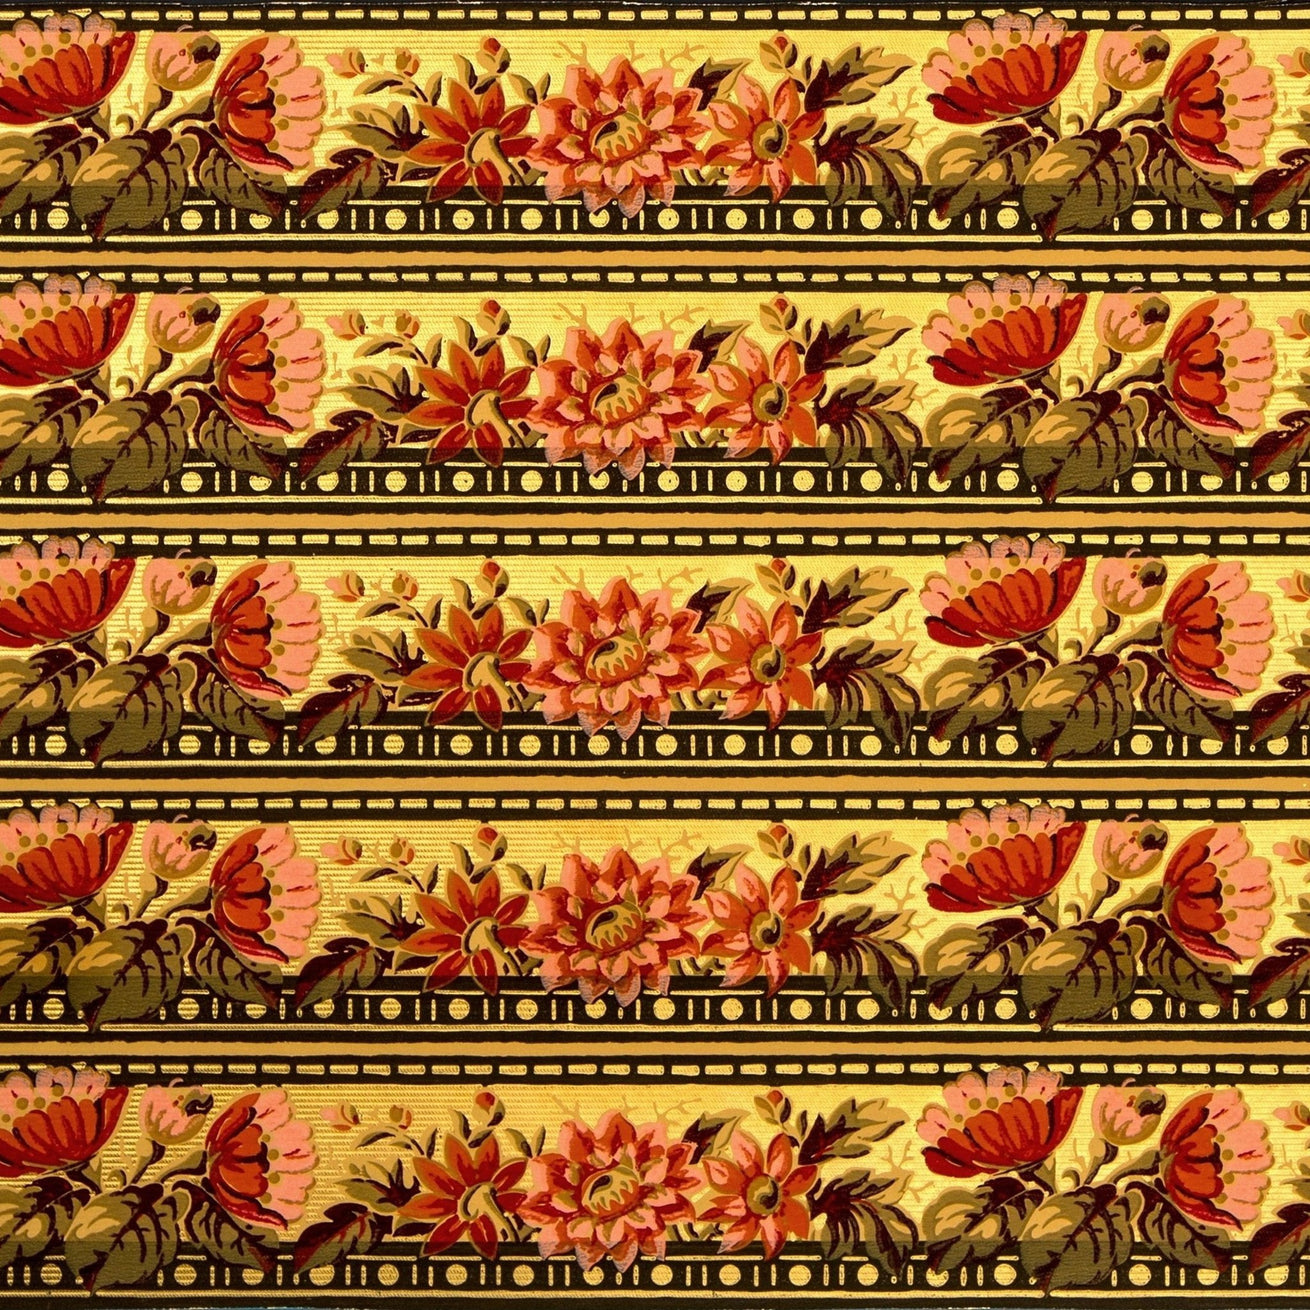 5-Band 3-5/8" Gilt Floral/Foliate Border - Antique Wallpaper Roll